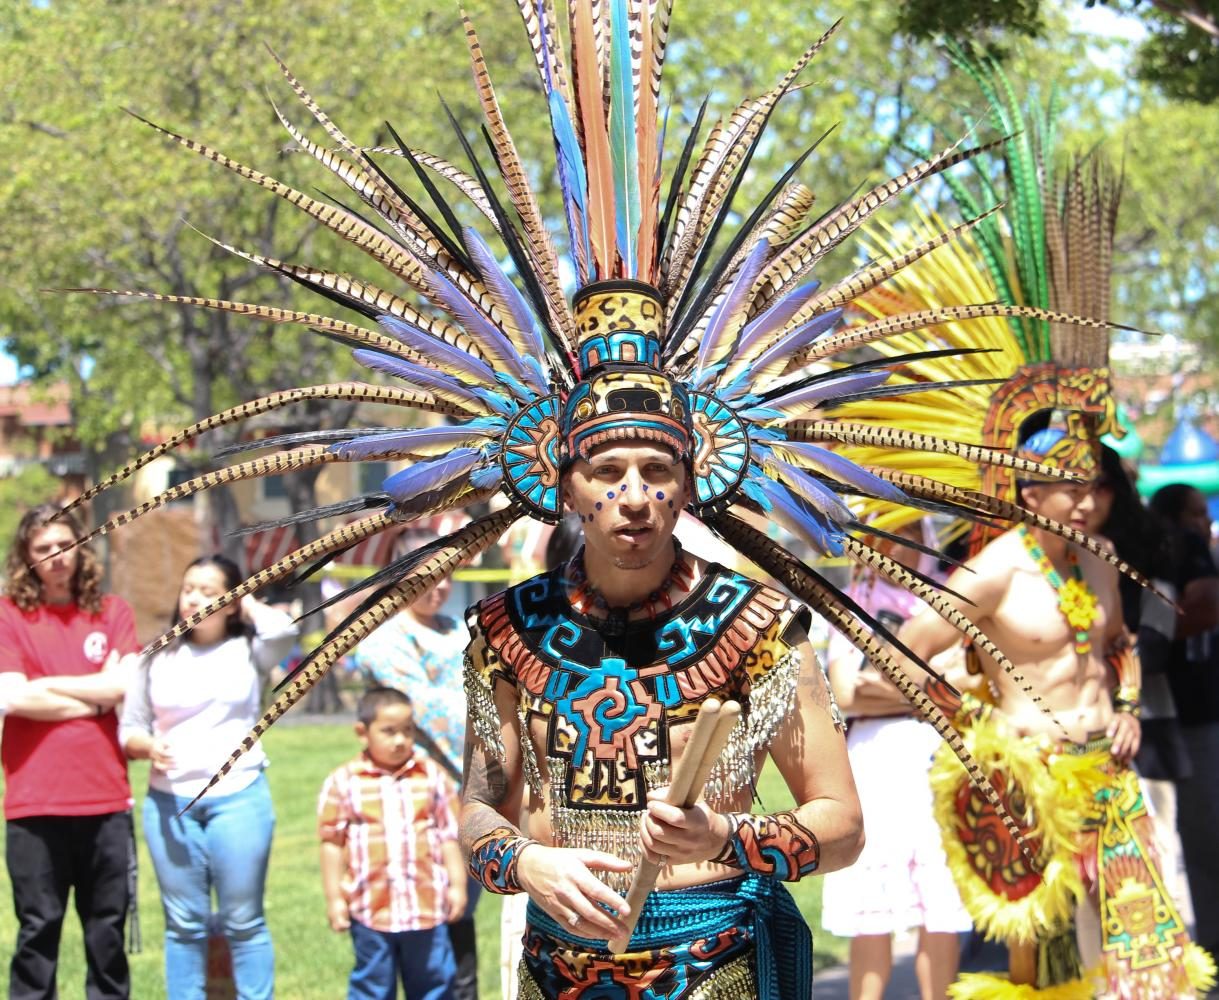 Downtown Hayward hosts Cinco De Mayo festivities